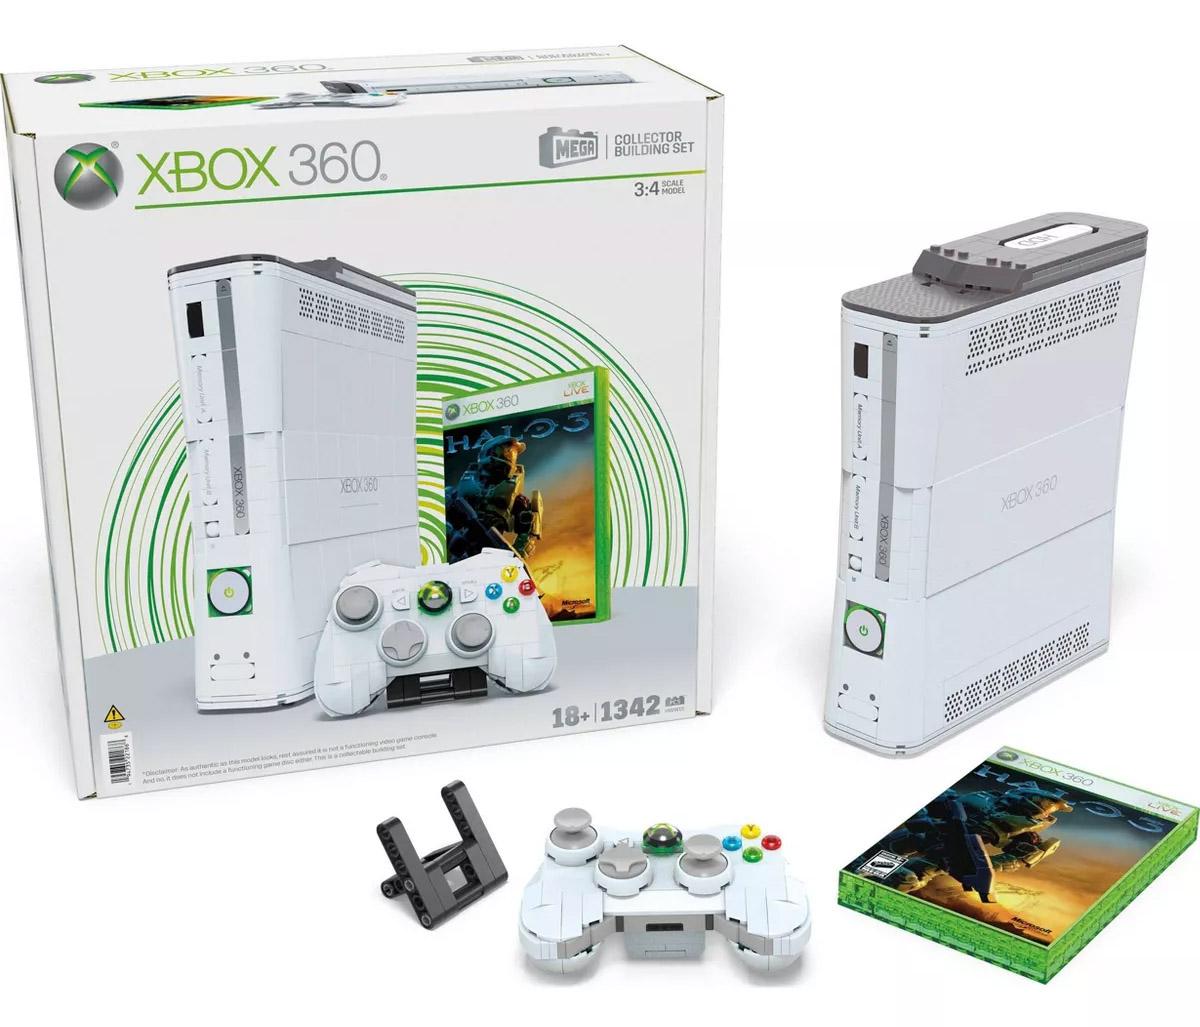 Mega Showcase Microsoft Xbox 360 Collector Building Set for $99.99 Shipped